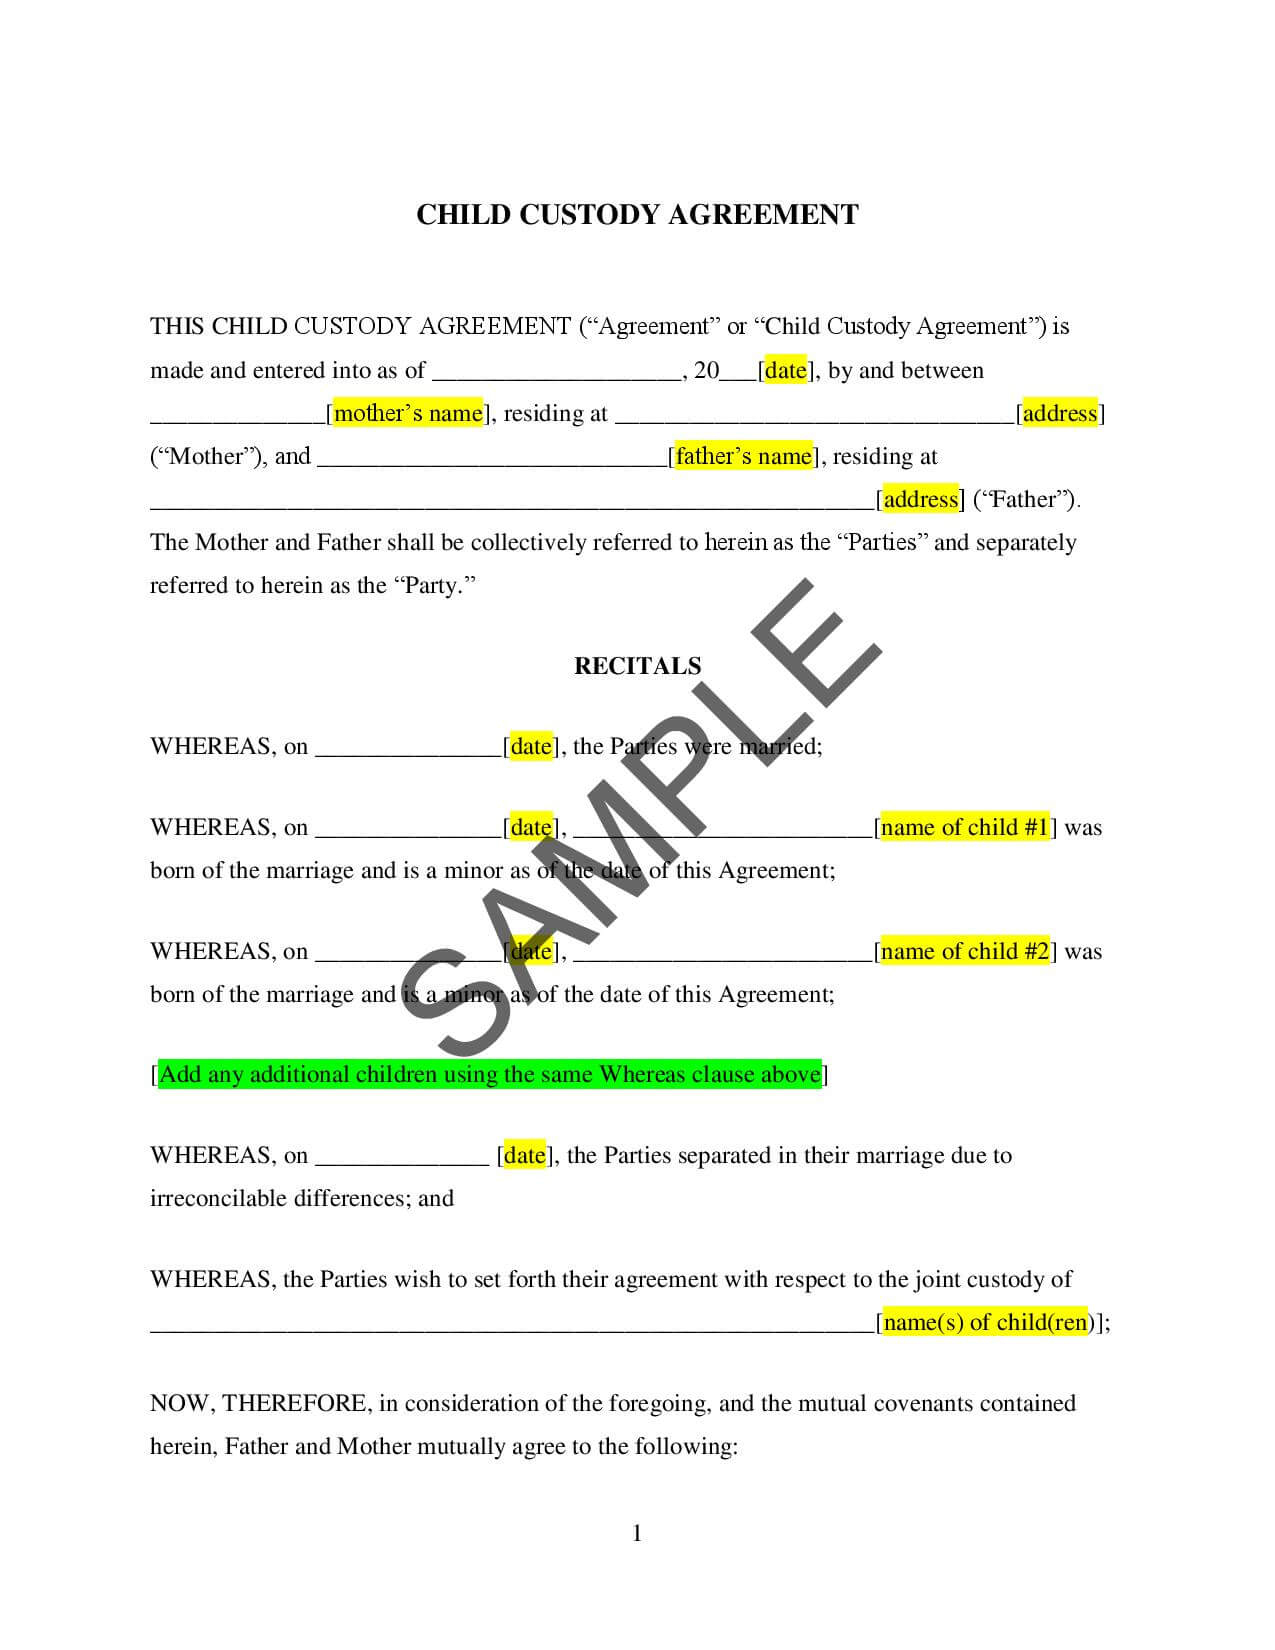 Custody Agreement Sample Child Custody Agreement